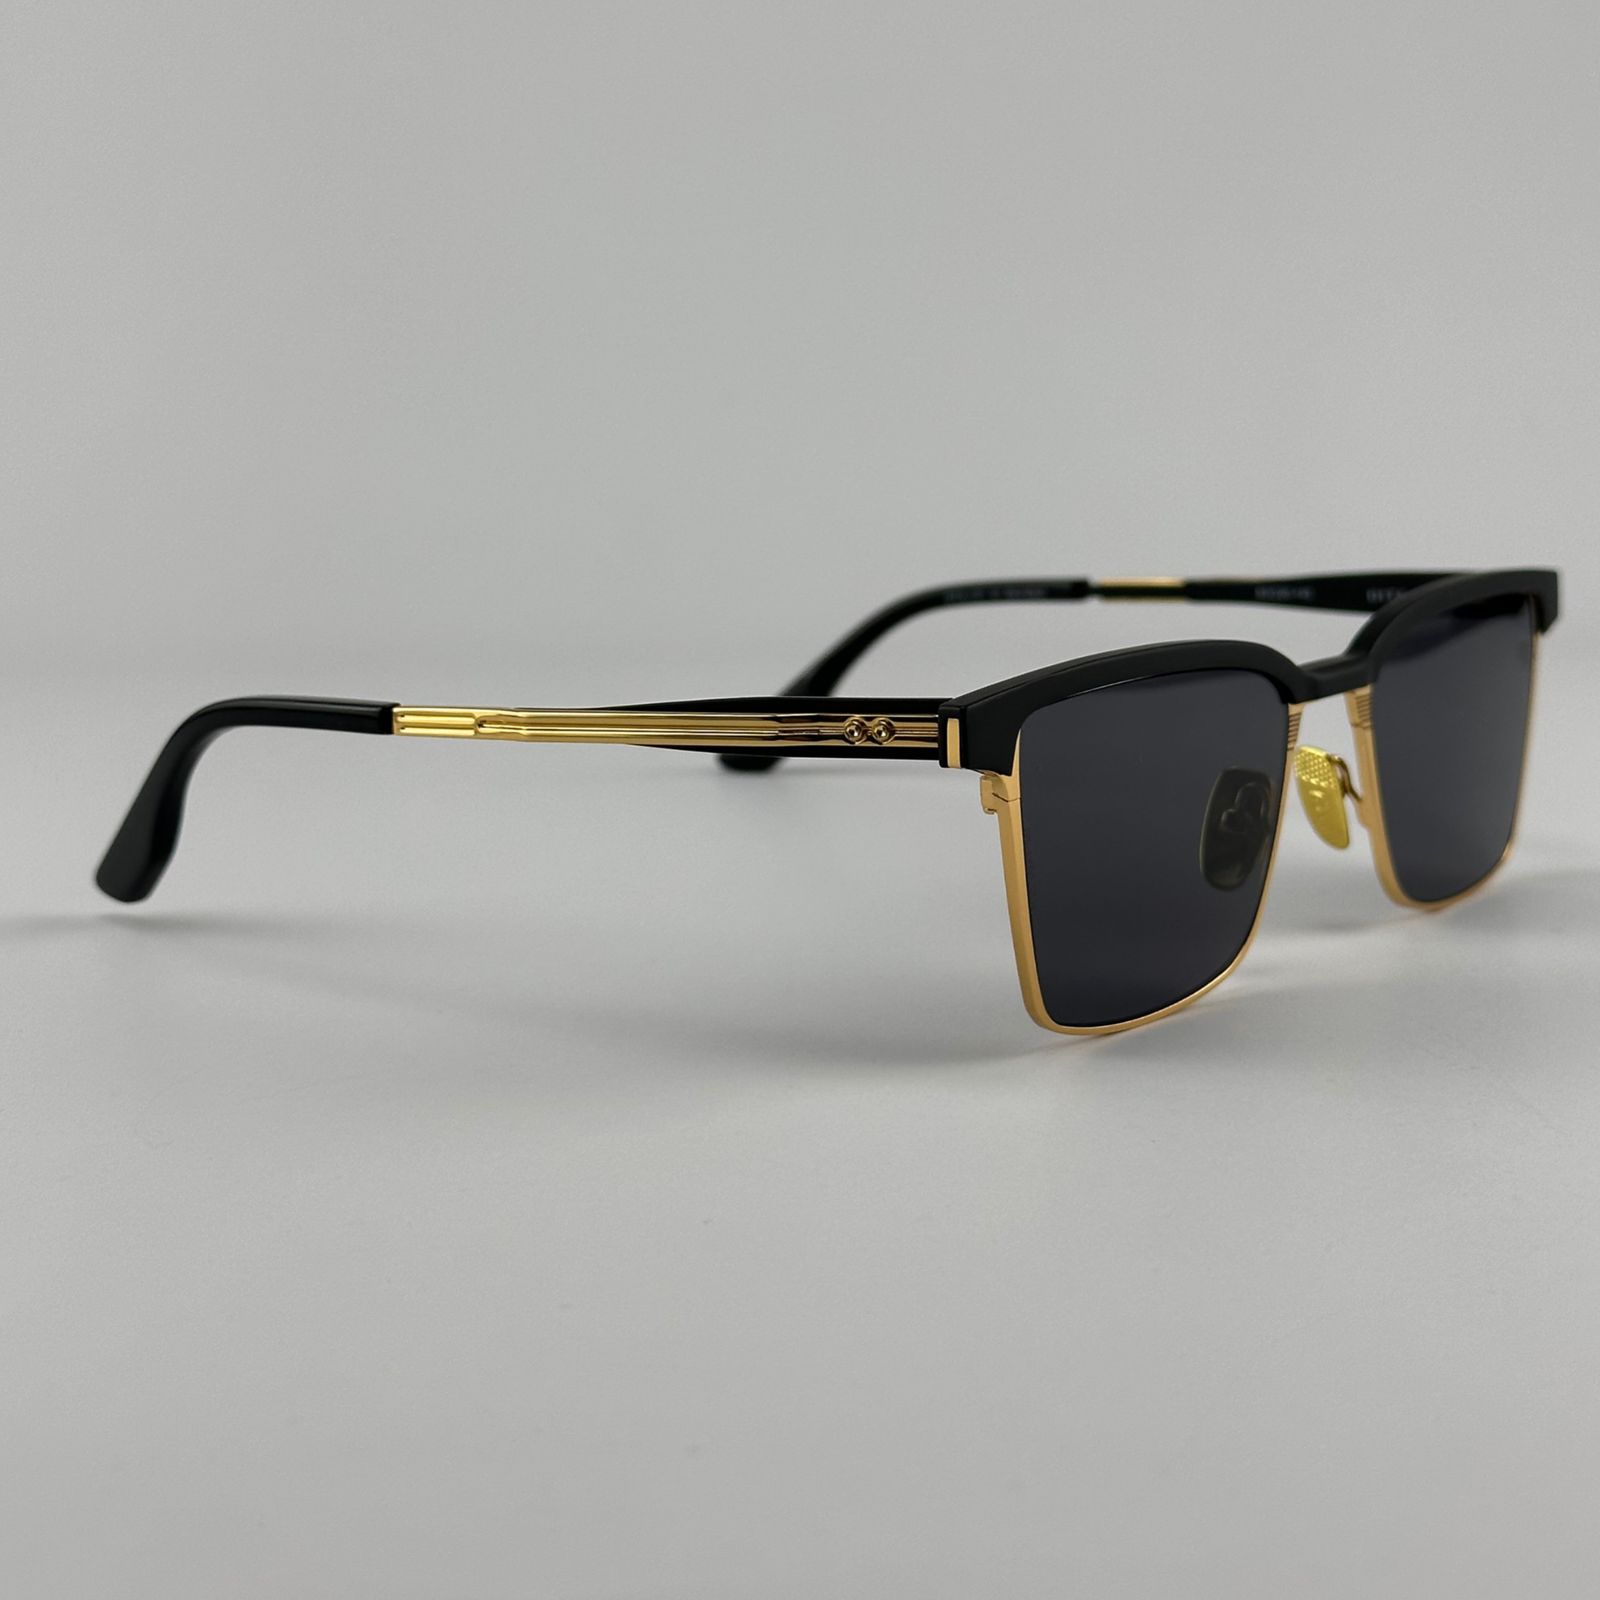 عینک آفتابی دیتا مدل DTX-137 01 SLV-GLD -  - 4